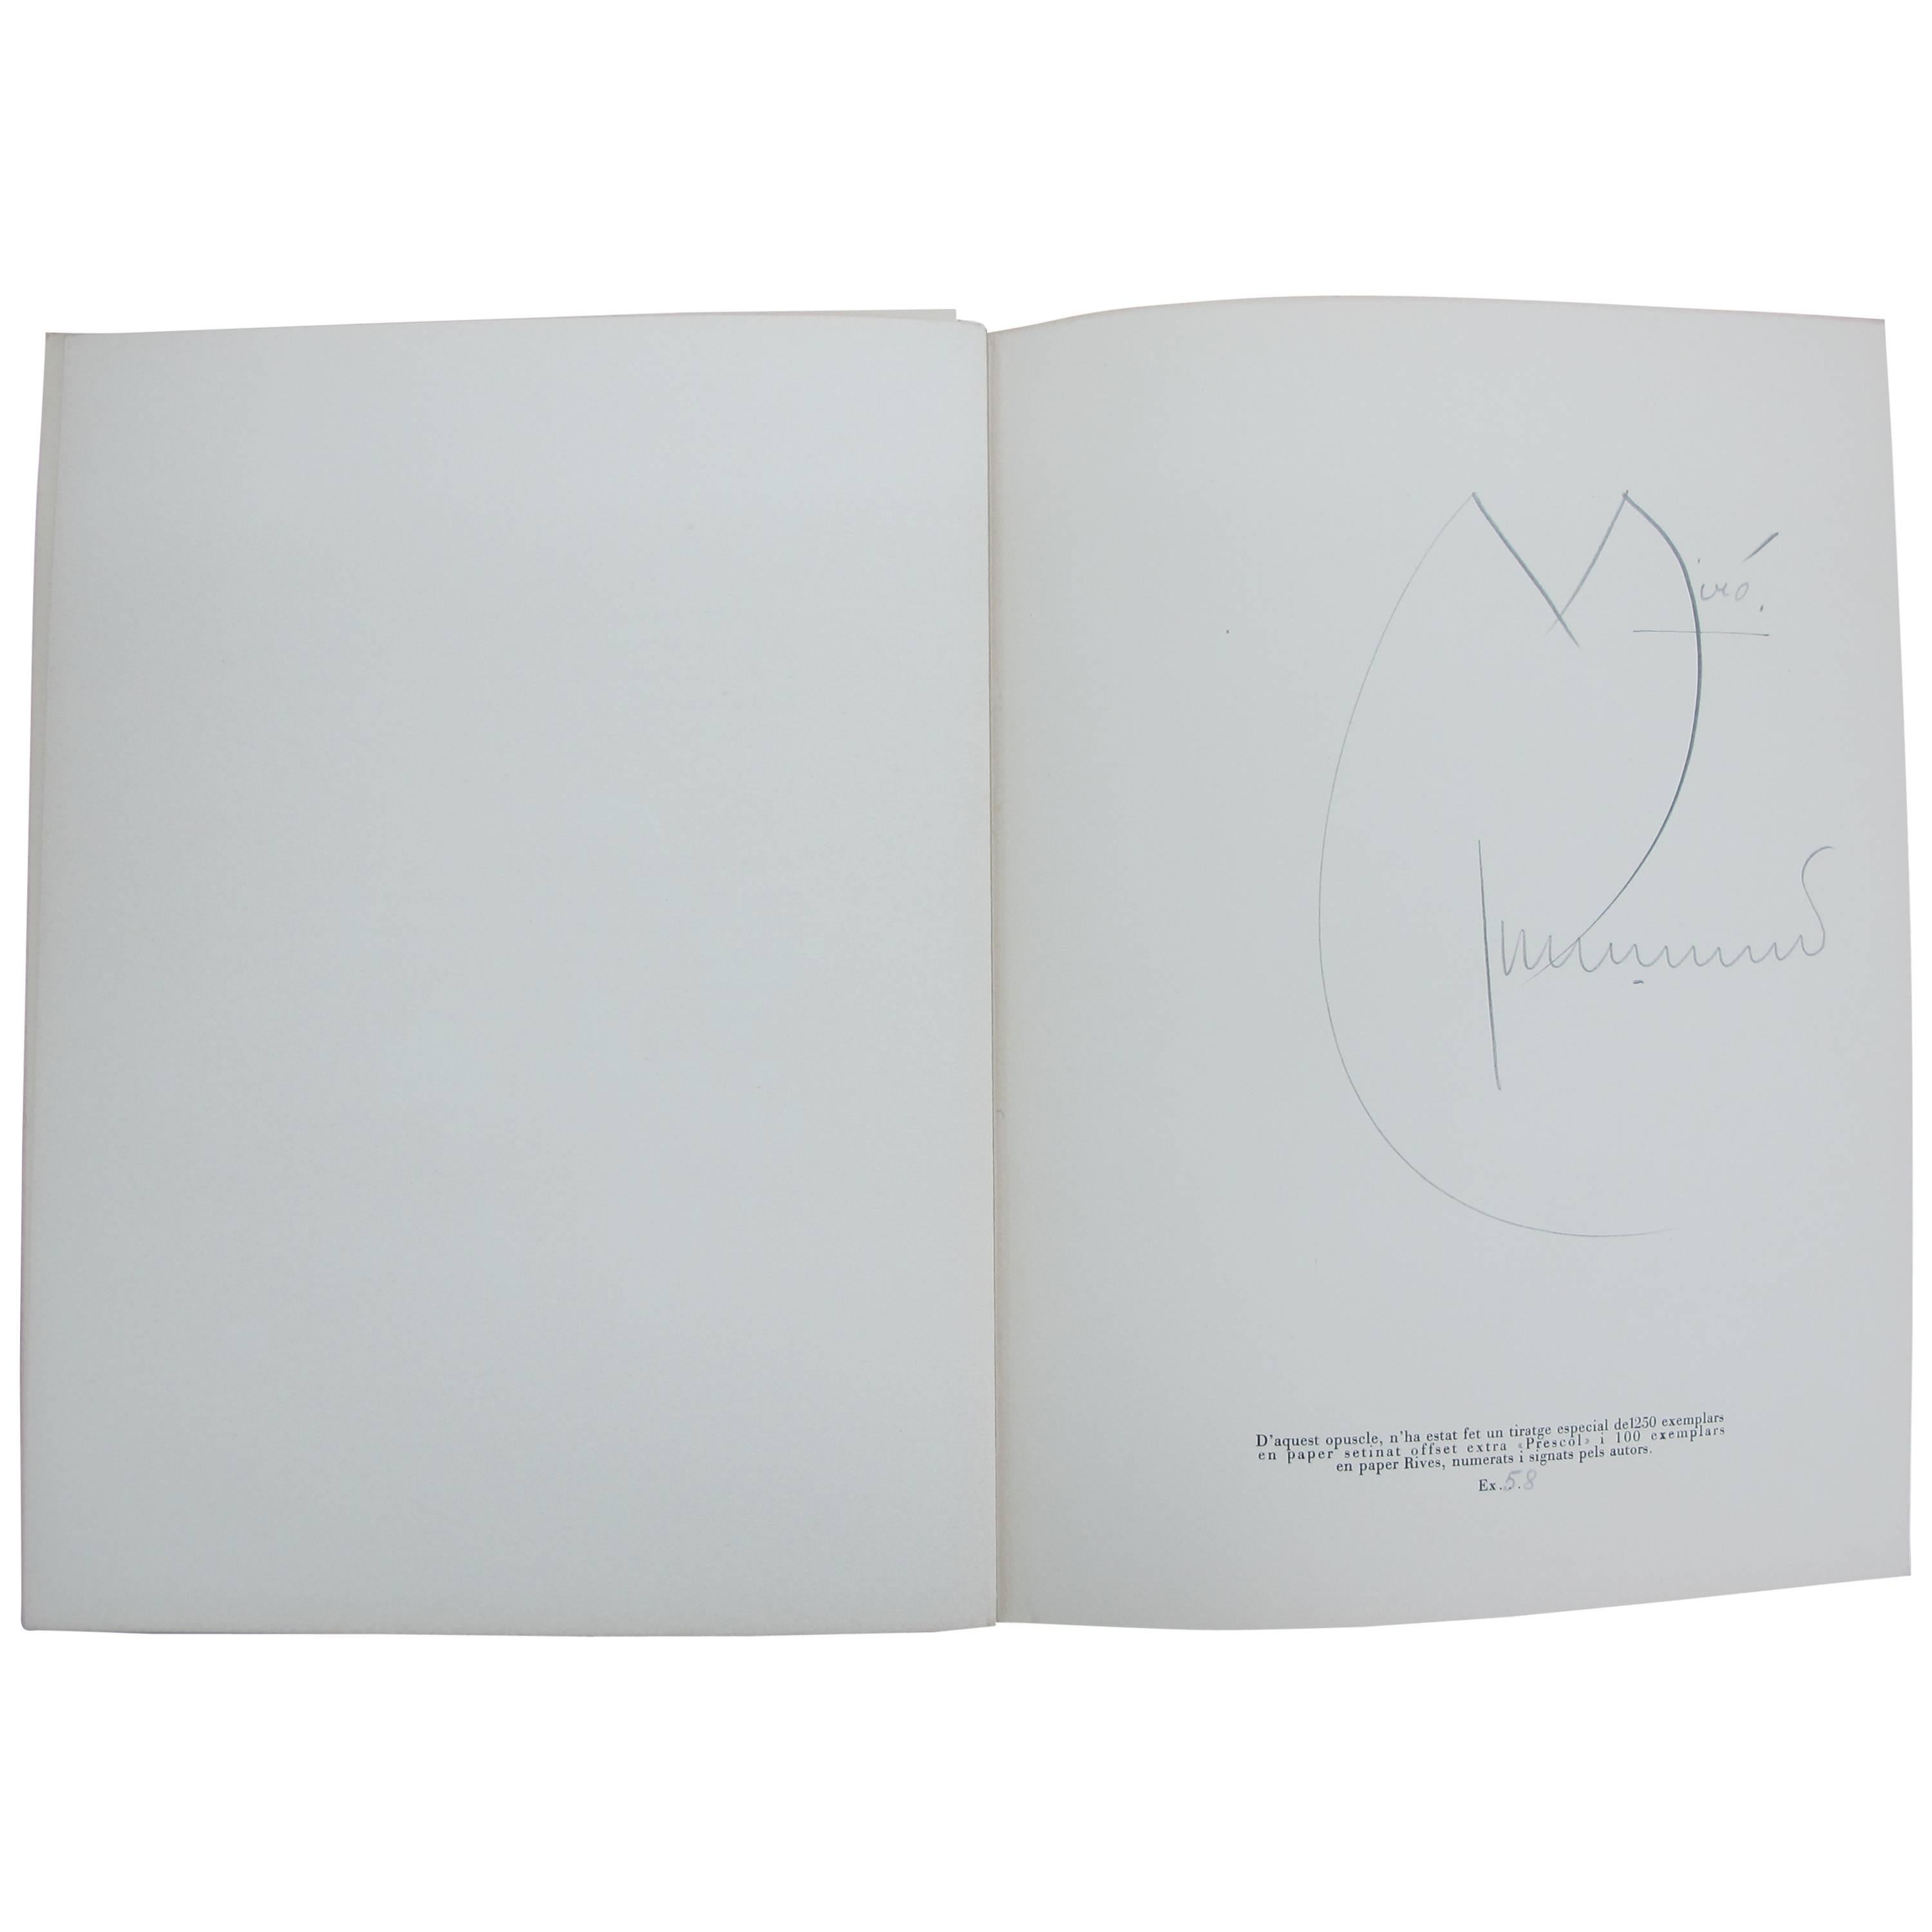 Joan Miró Album 19 with Four Original Lithographs